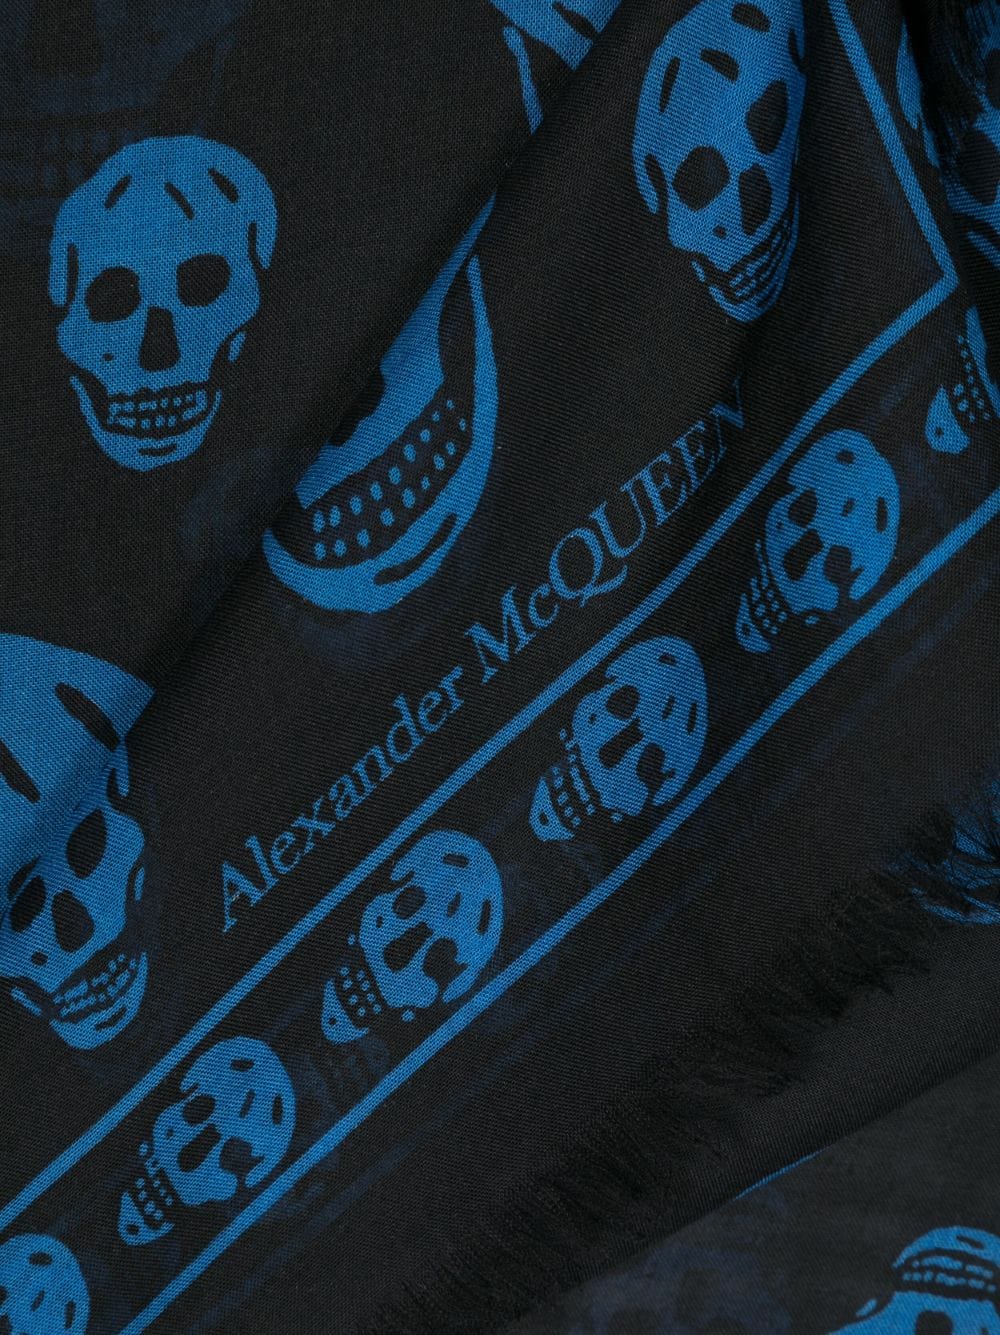 Skull-print frayed scarf